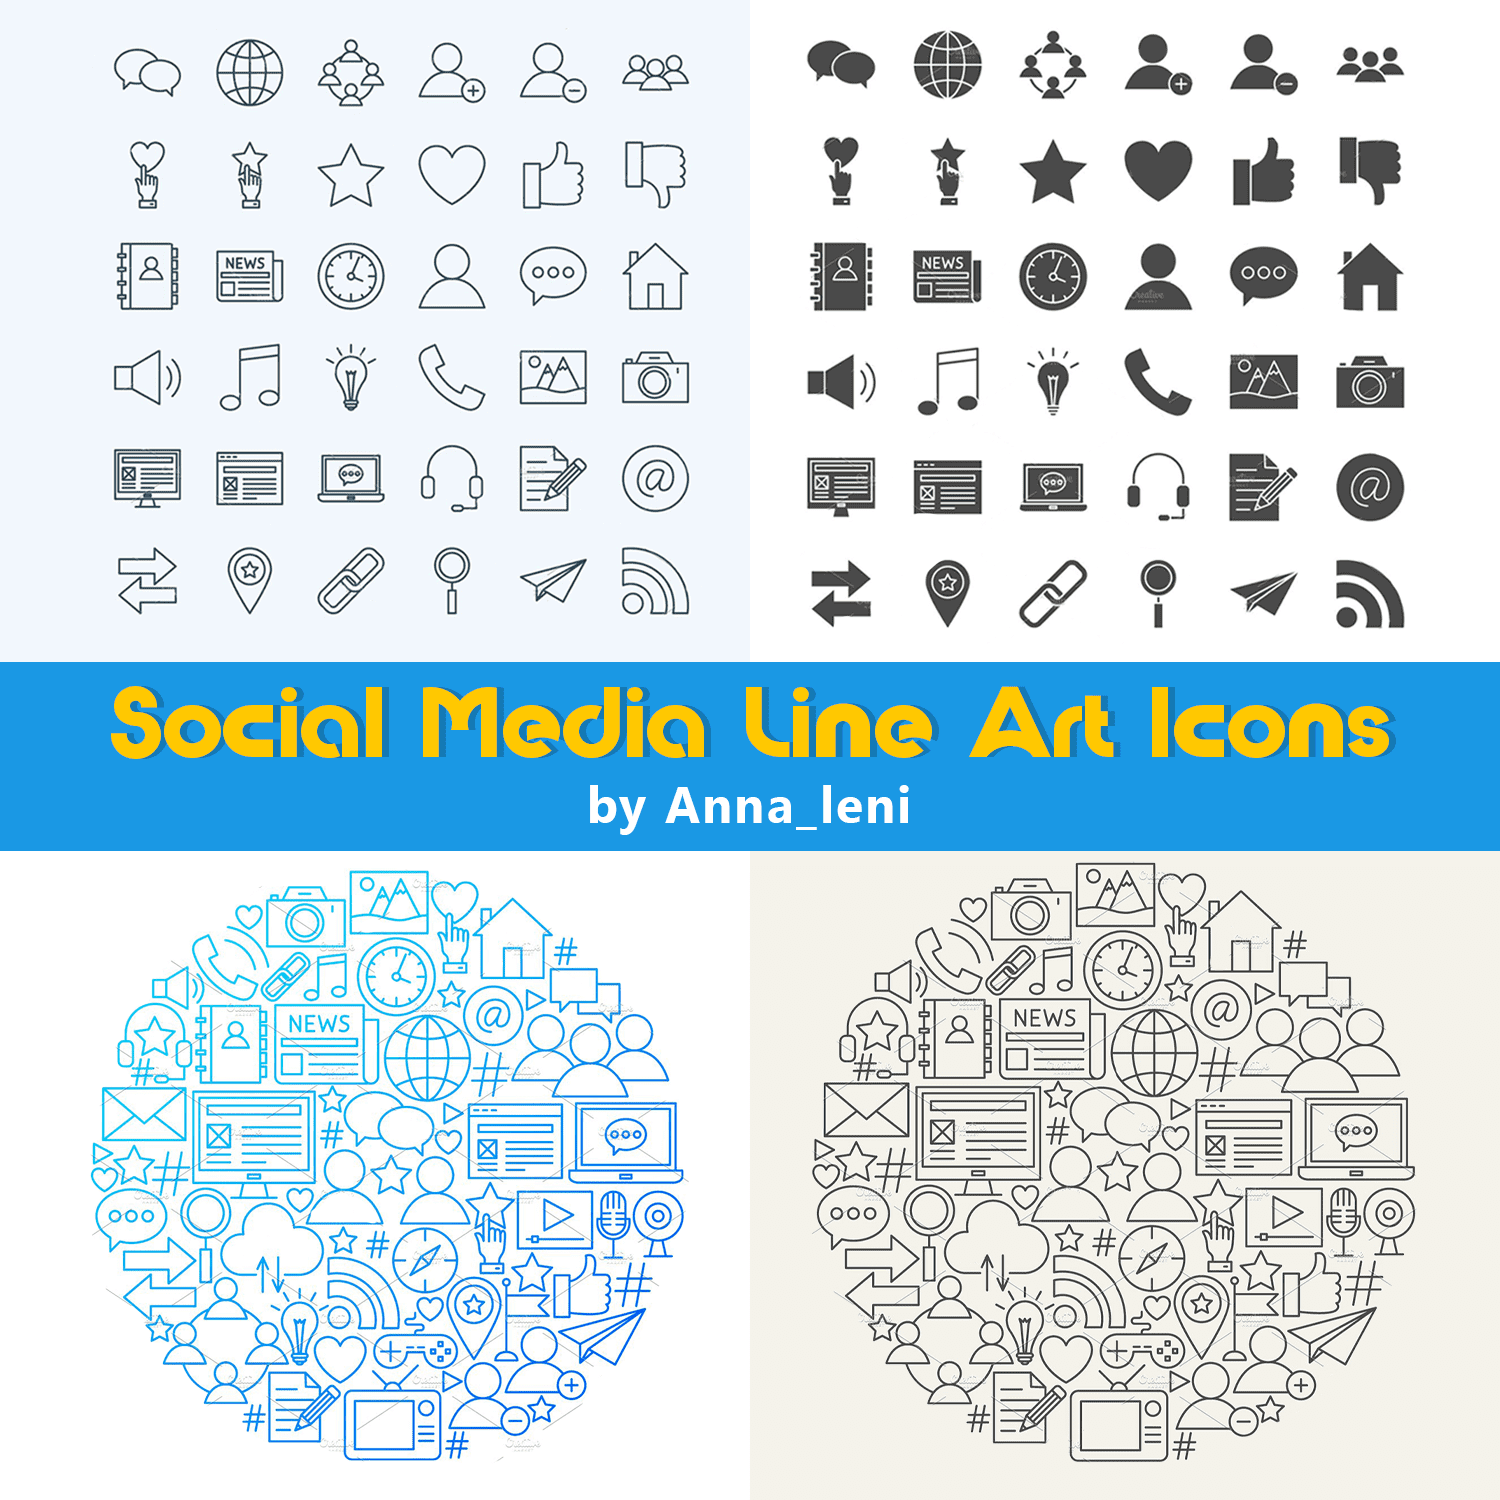 Social Media Line Art Icons cover.